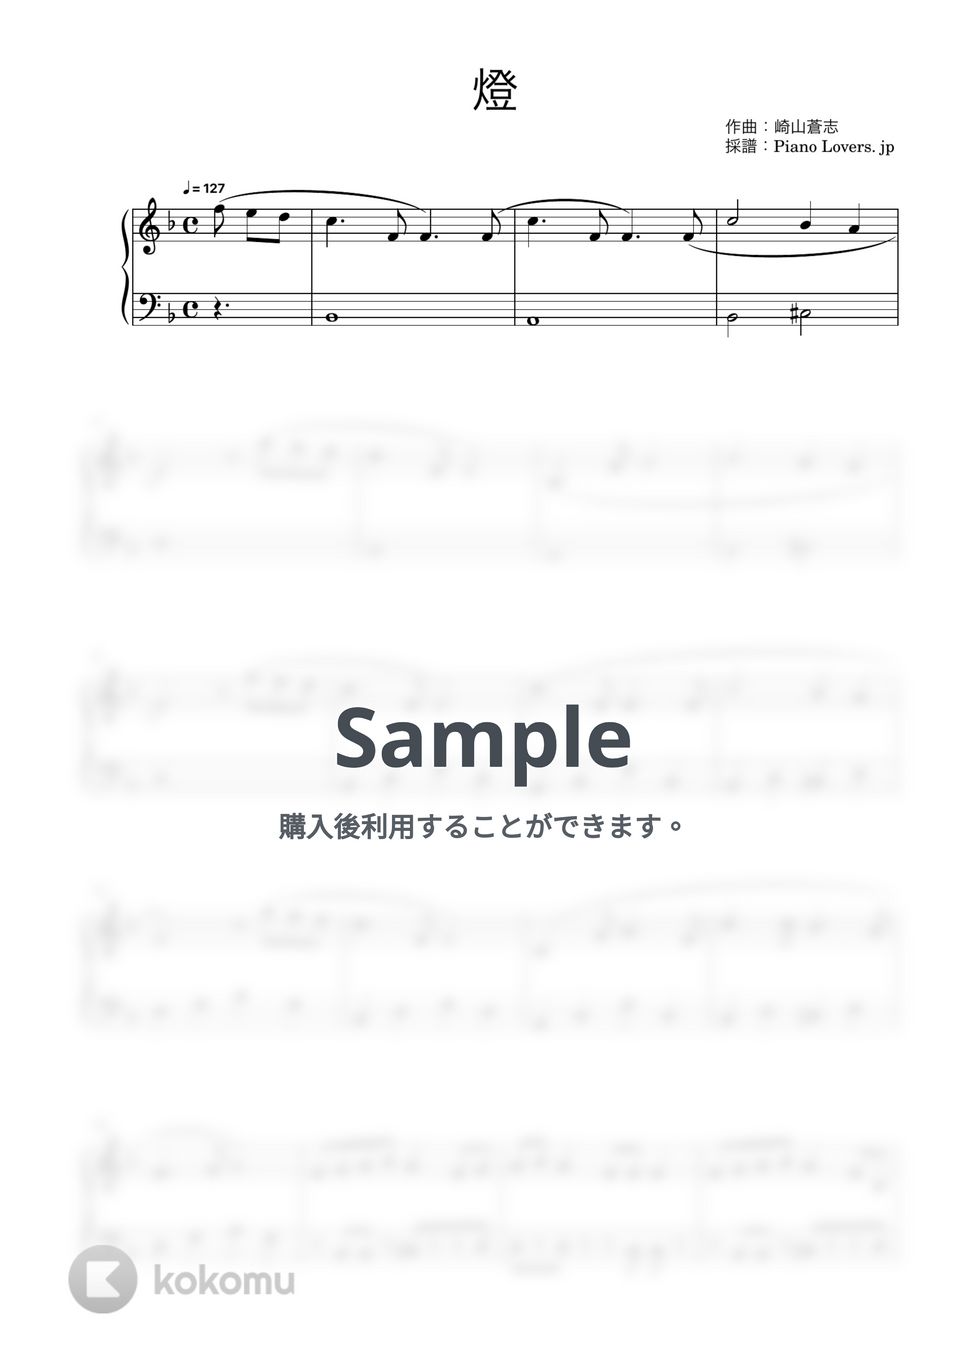 崎山蒼志 - 燈 (呪術廻戦) by Piano Lovers. jp